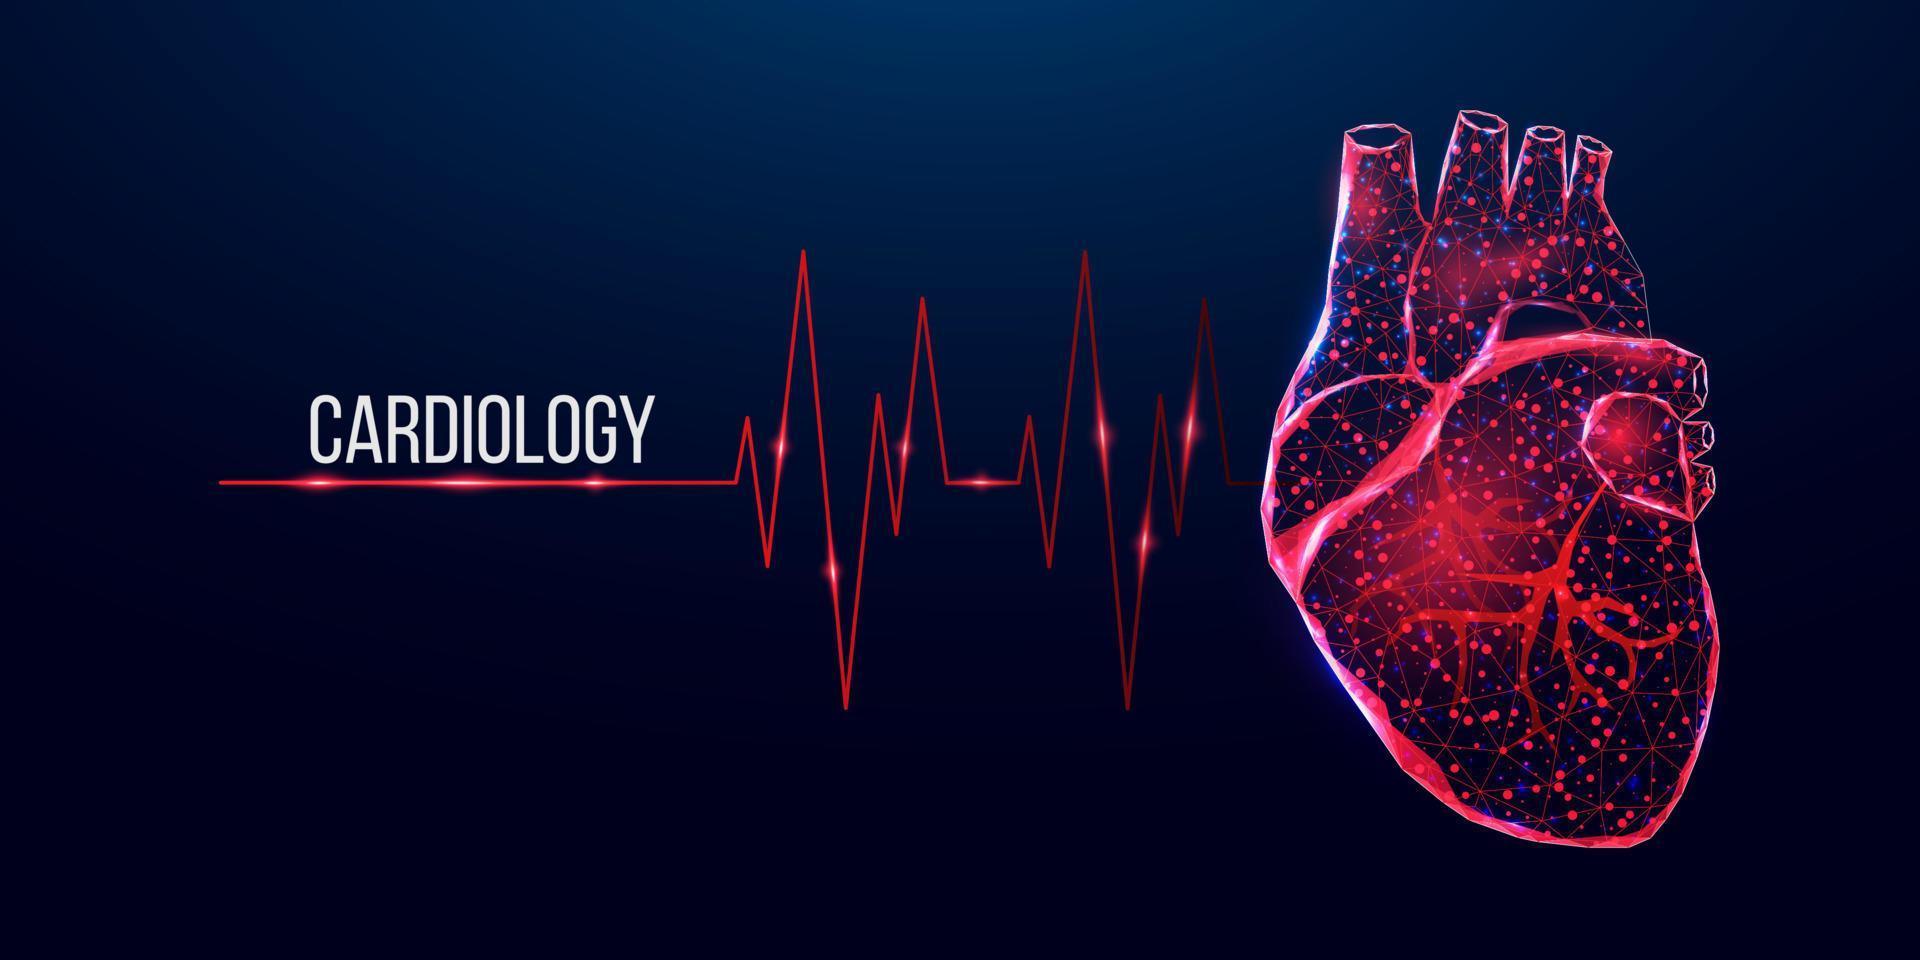 cardiologie concept banner. draadframe laag poly stijl rood hart. abstracte moderne 3d vectorillustratie op donkerblauwe achtergrond. vector